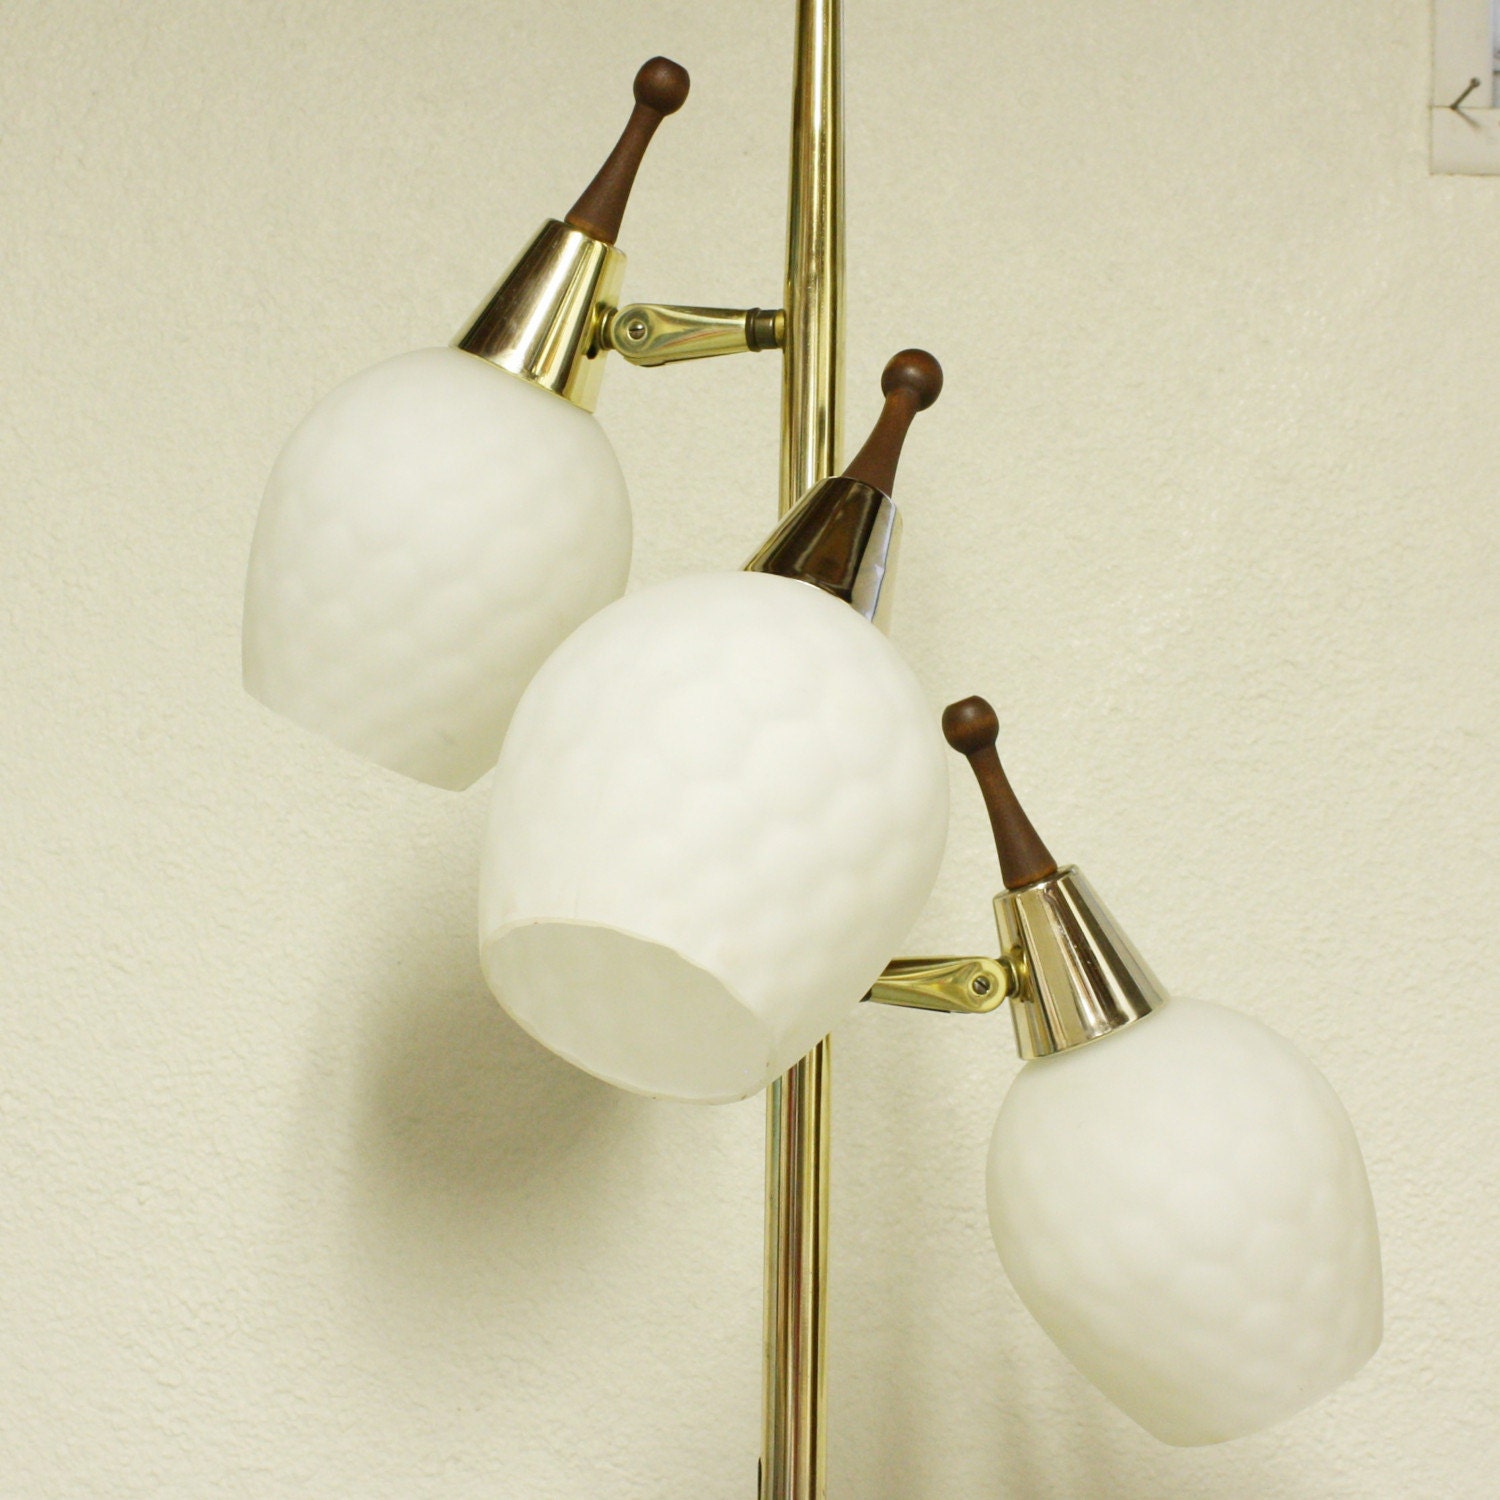  Floor Lamps on Vintage Floor Lamp   Glass Shades   4 Way Switch   Adjustable Lights